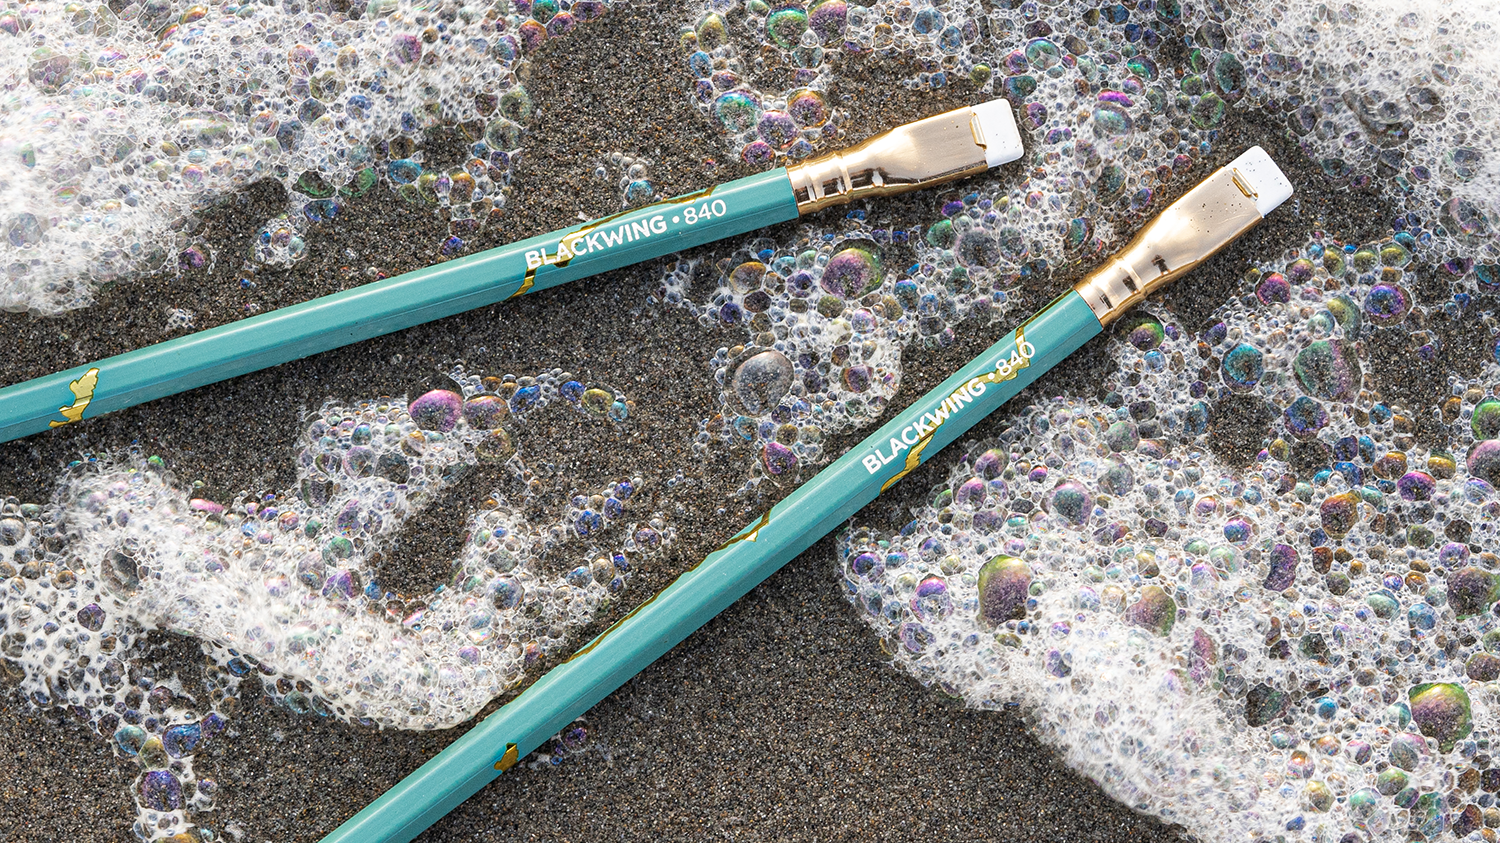 Blackwing Volume 840 Pencils near the ocean